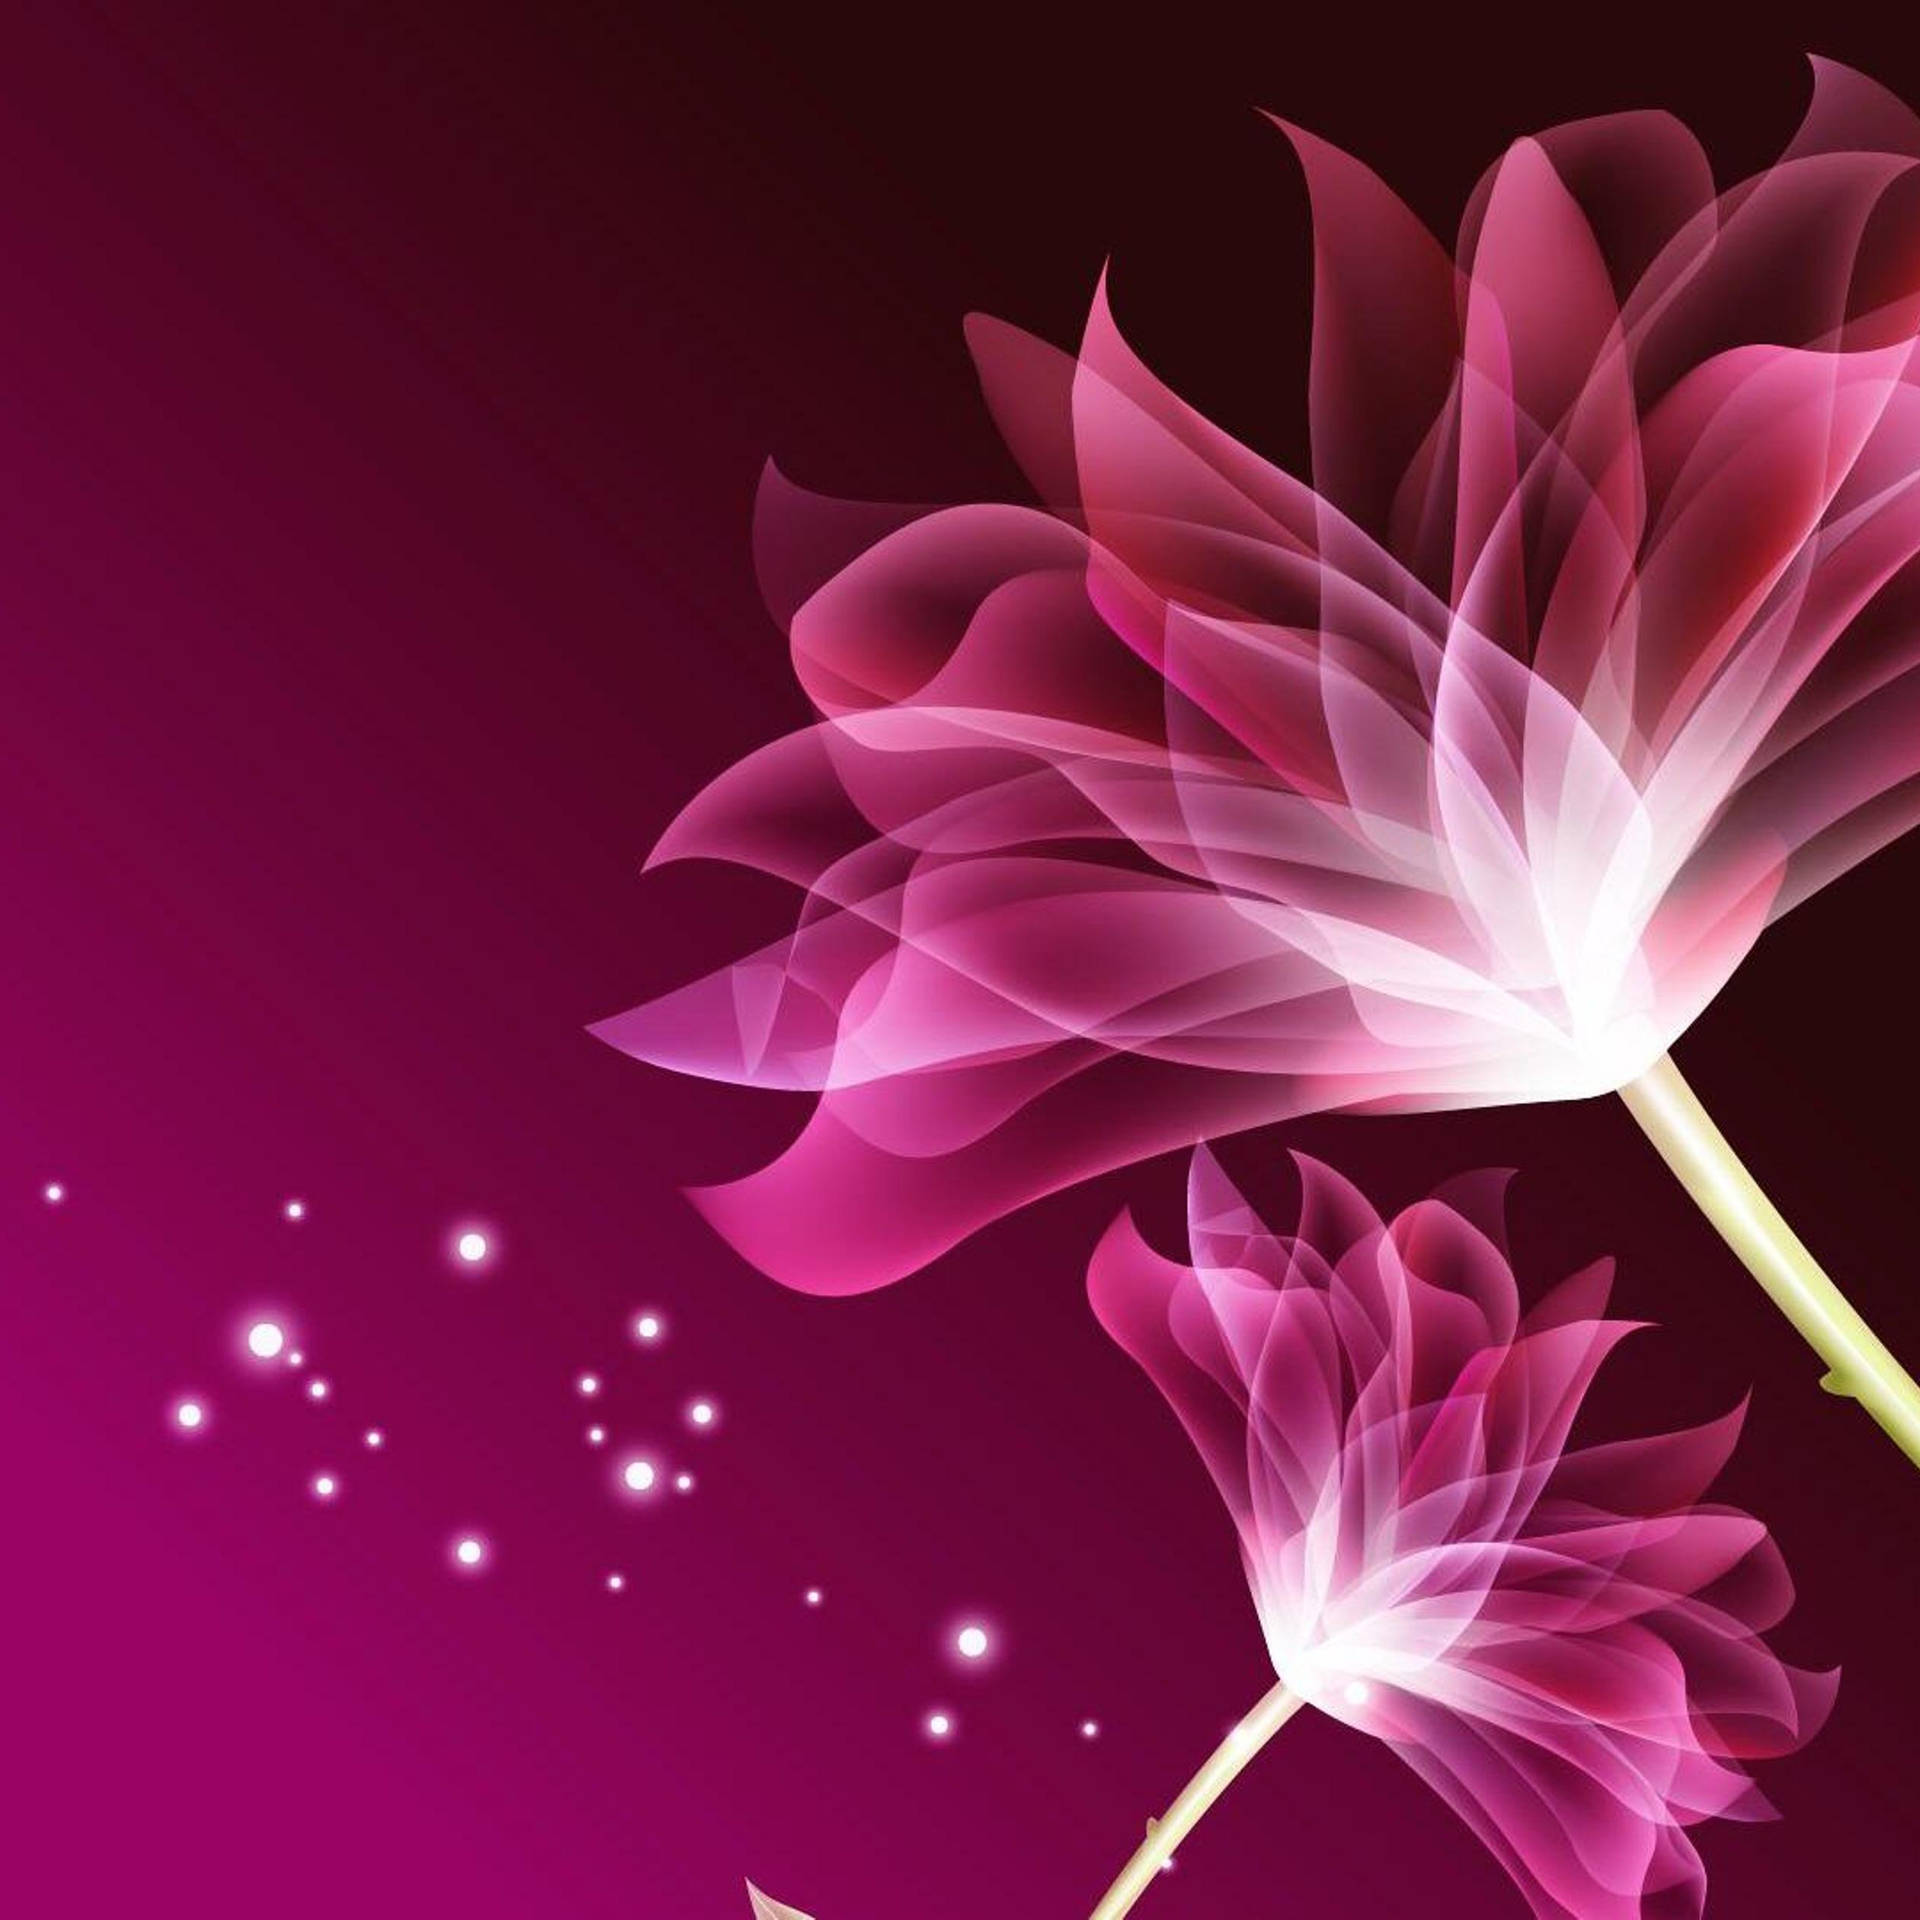 Glowing Pink Flower Design Wallpaper